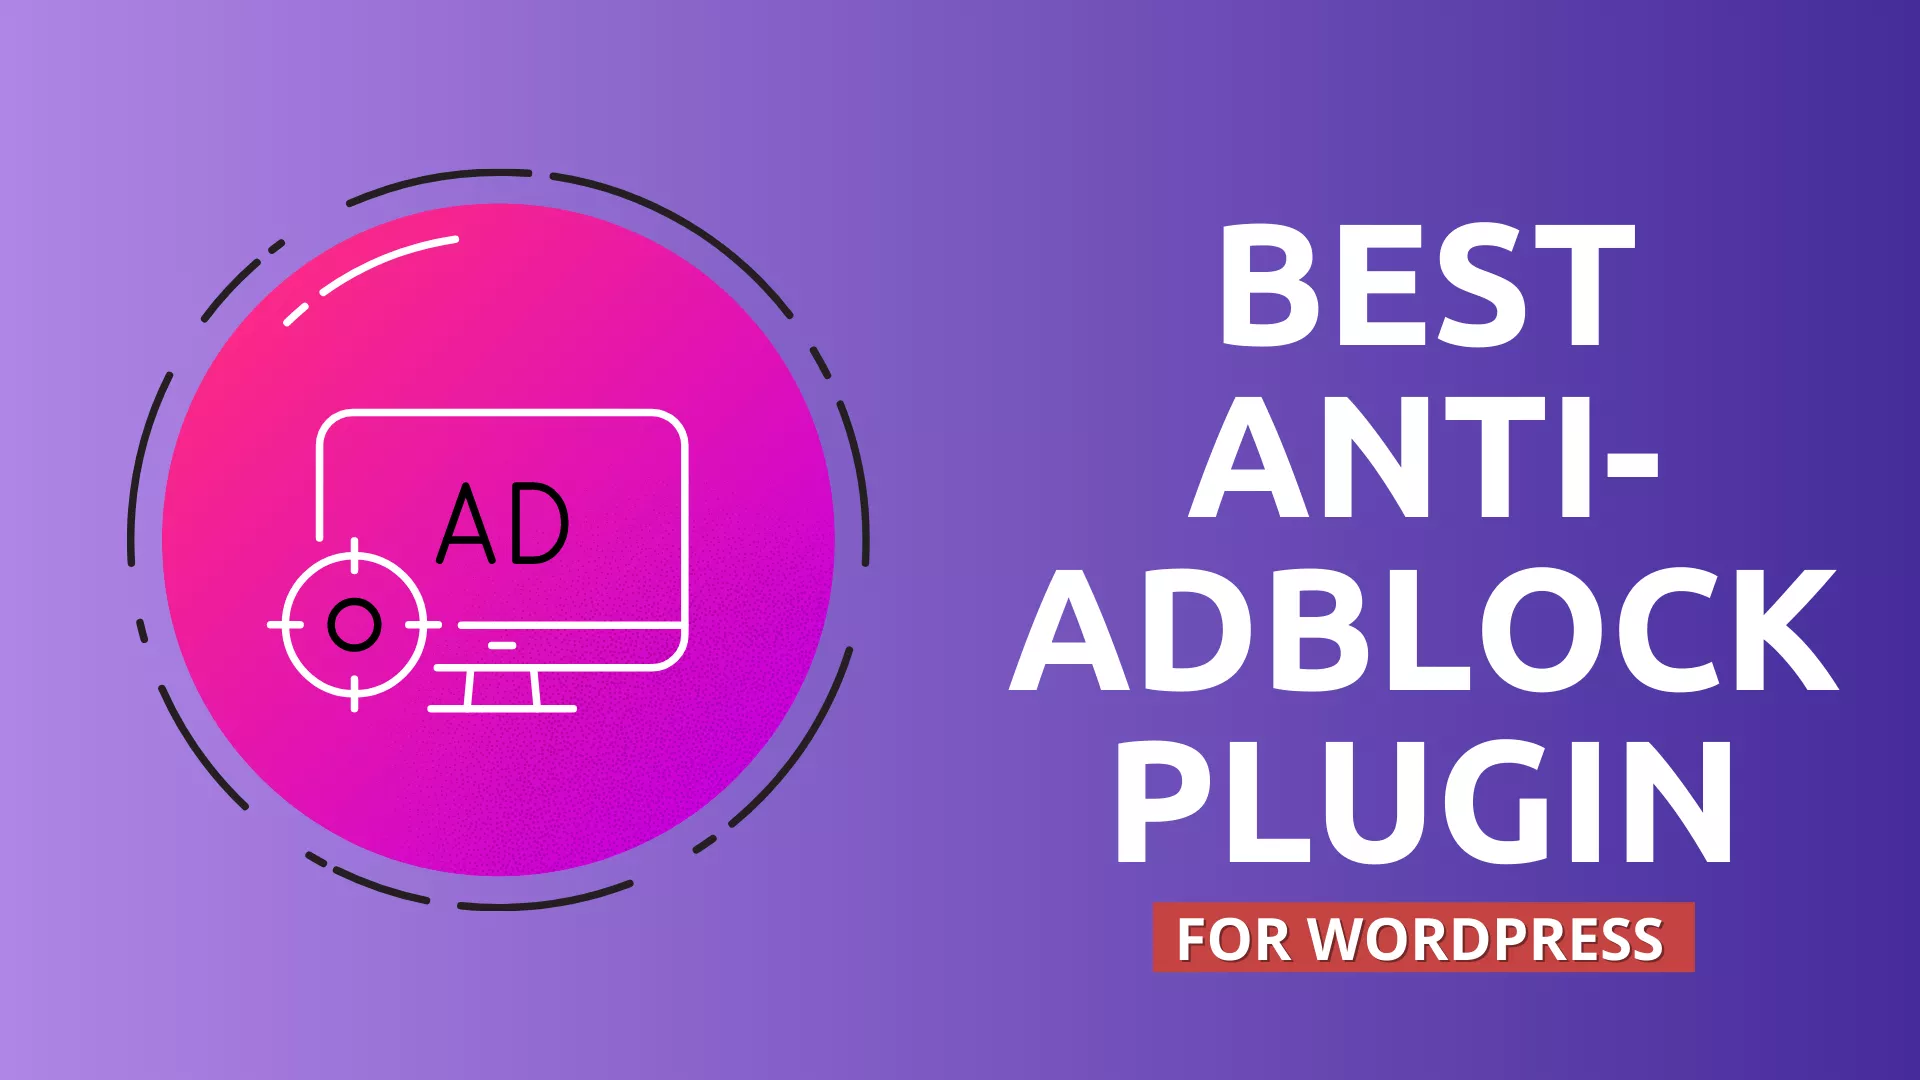 Best Anti Adblock Plugin for WordPress